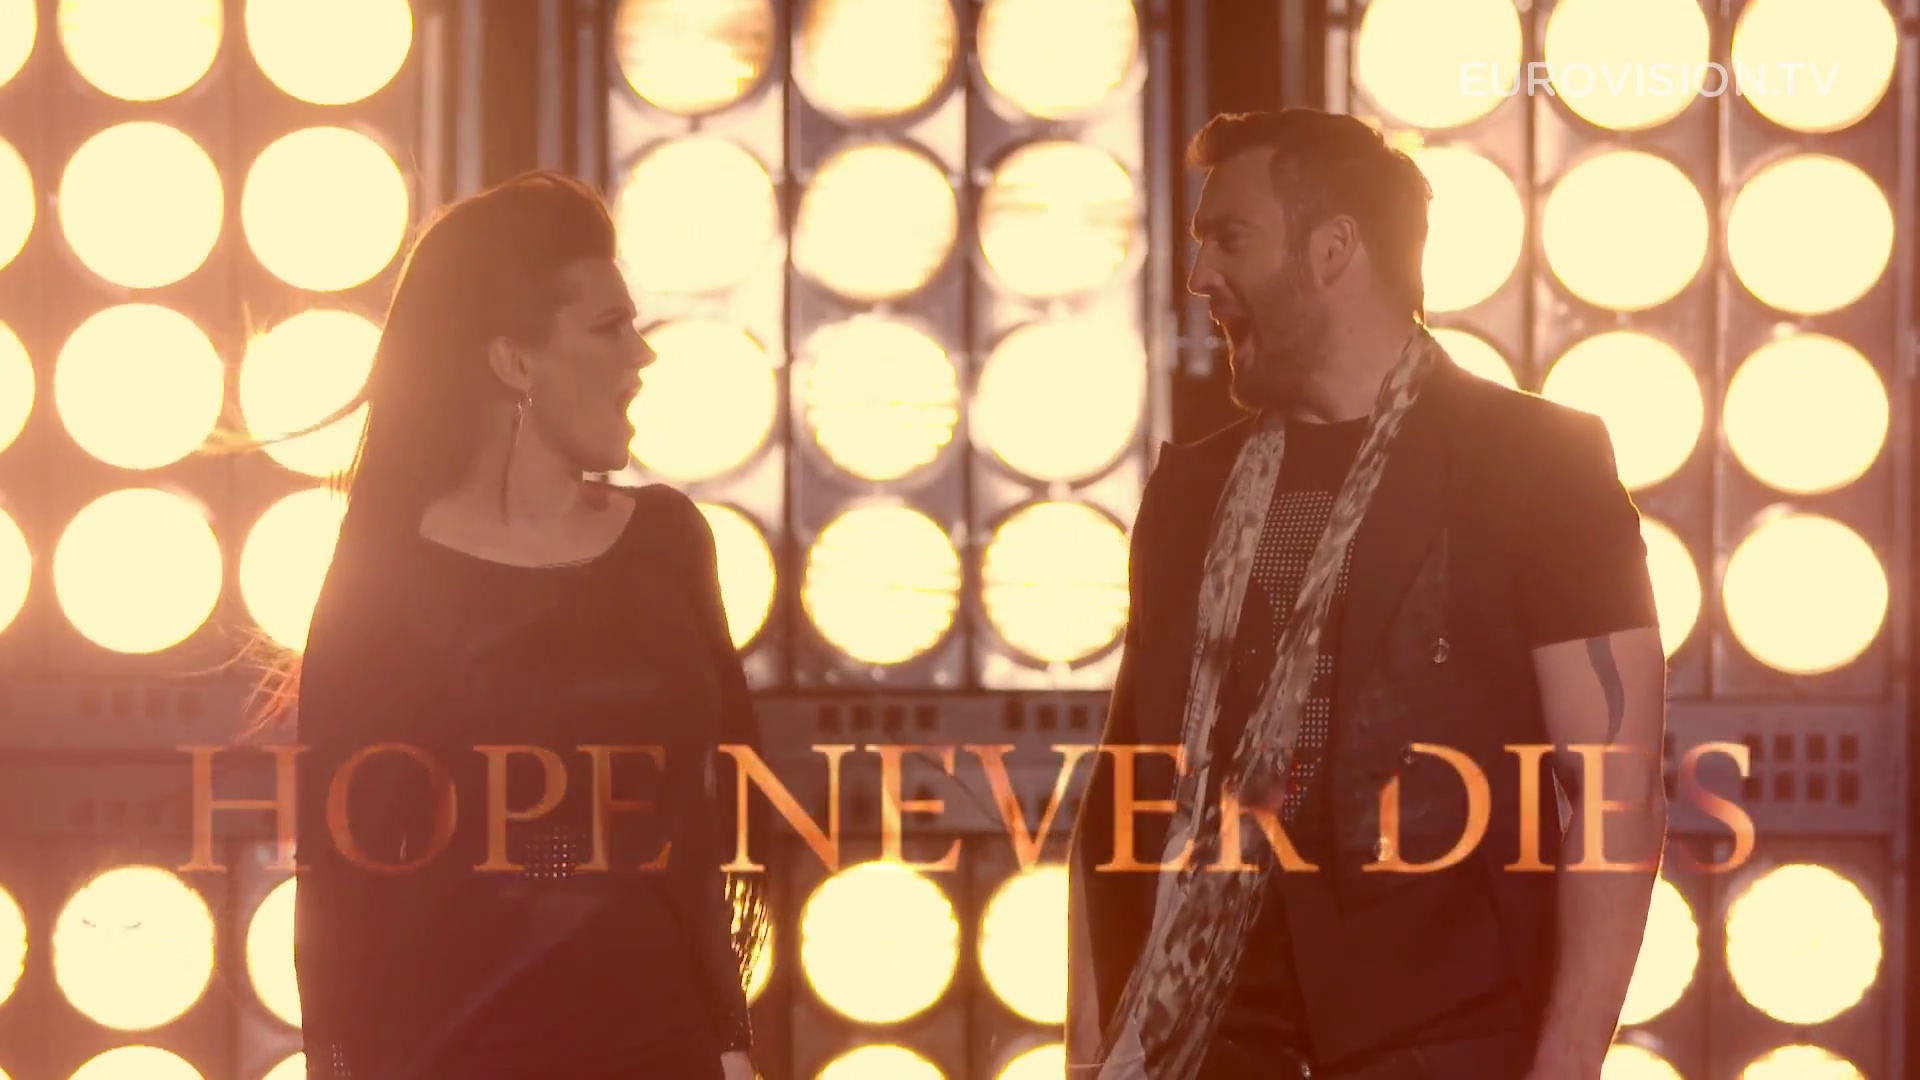 República Checa: Disfruta del video de "Hope Never Dies"!